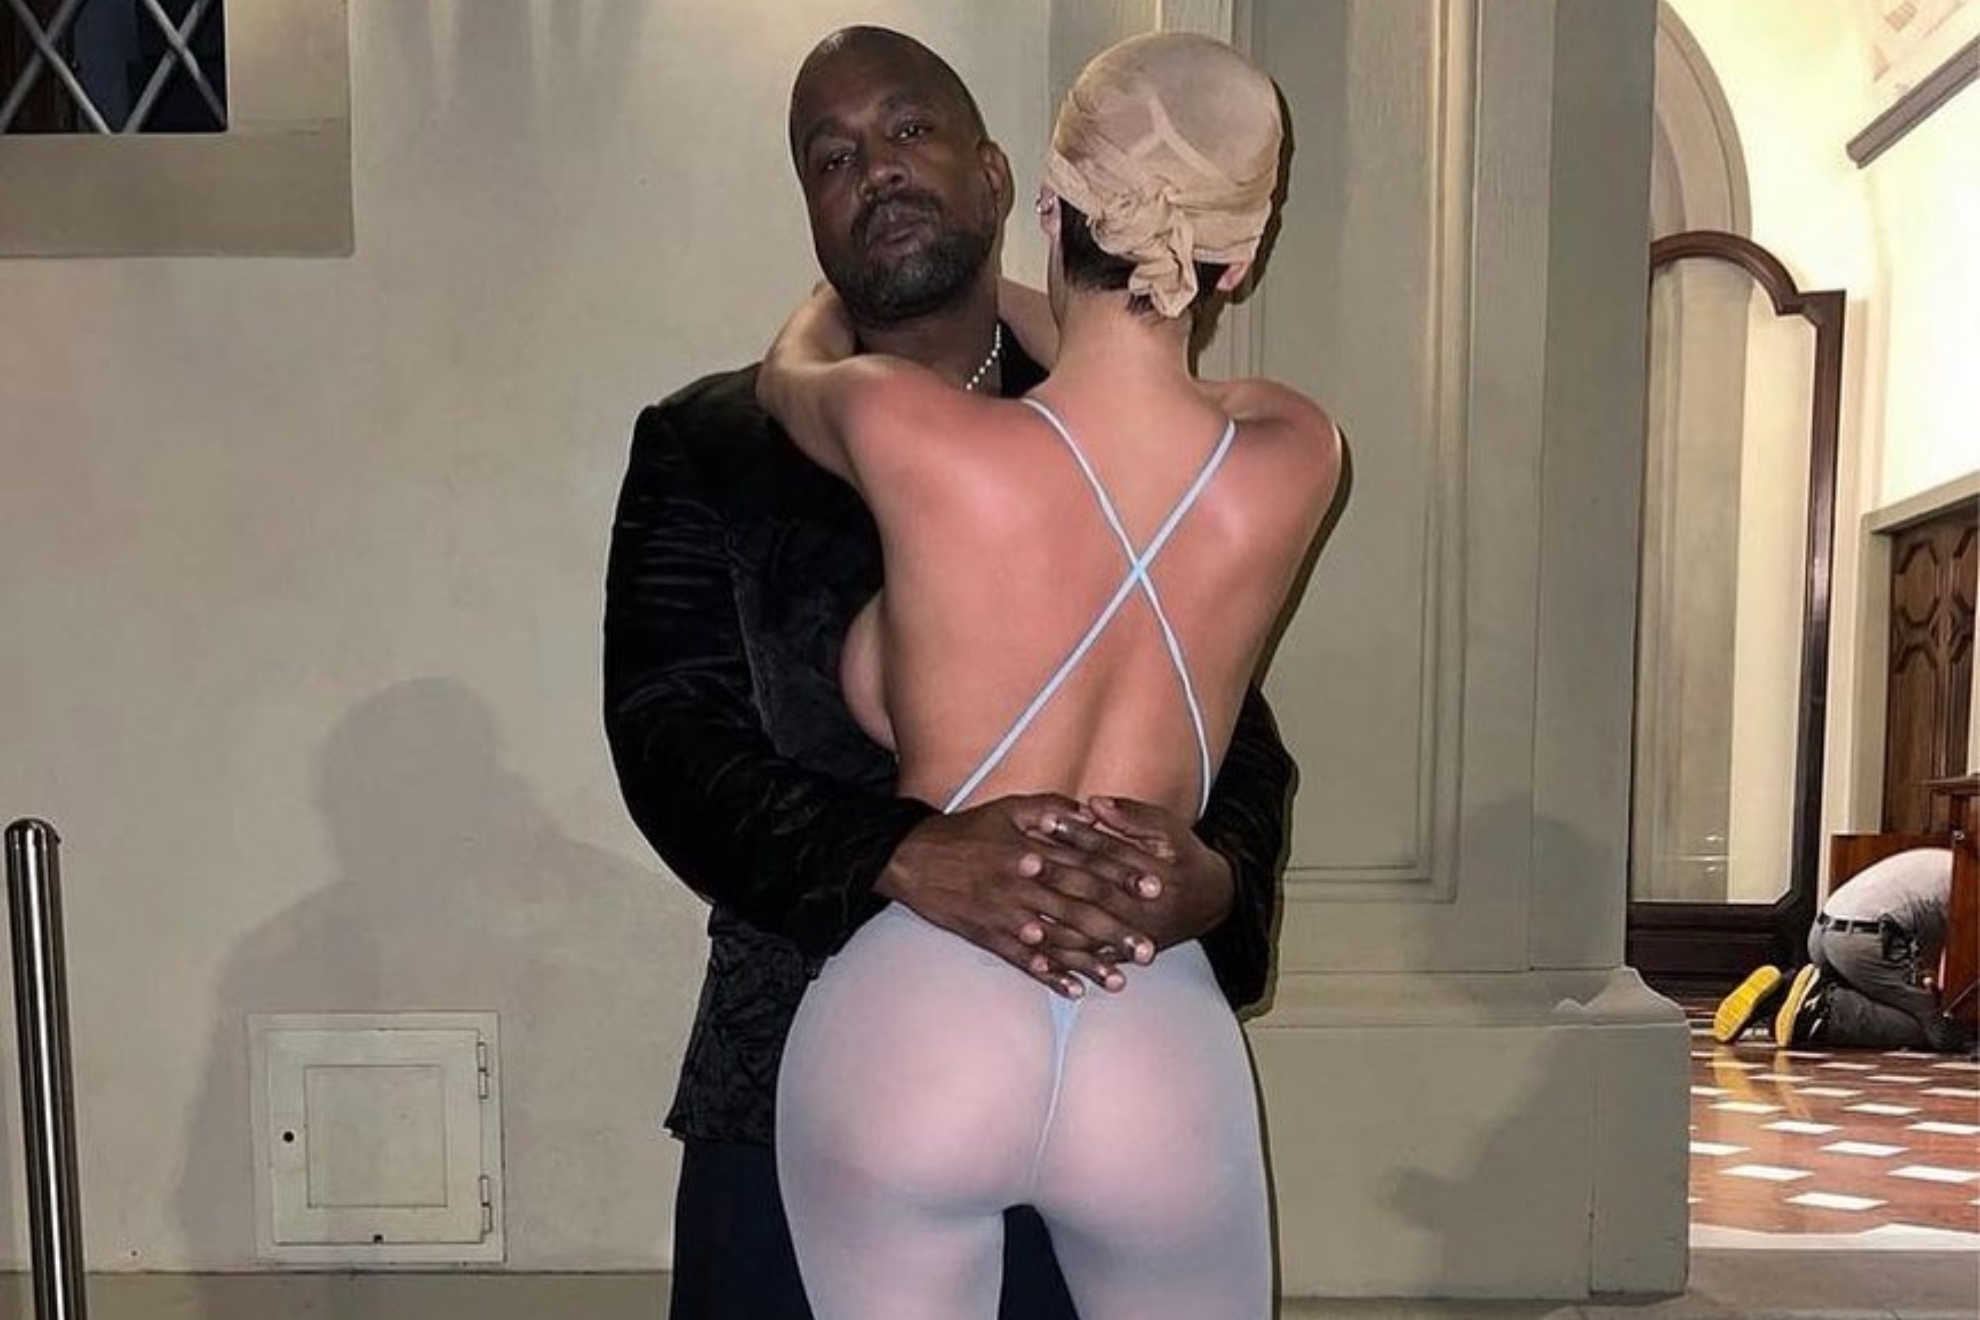 Bianca Censori with her husband Kanye West